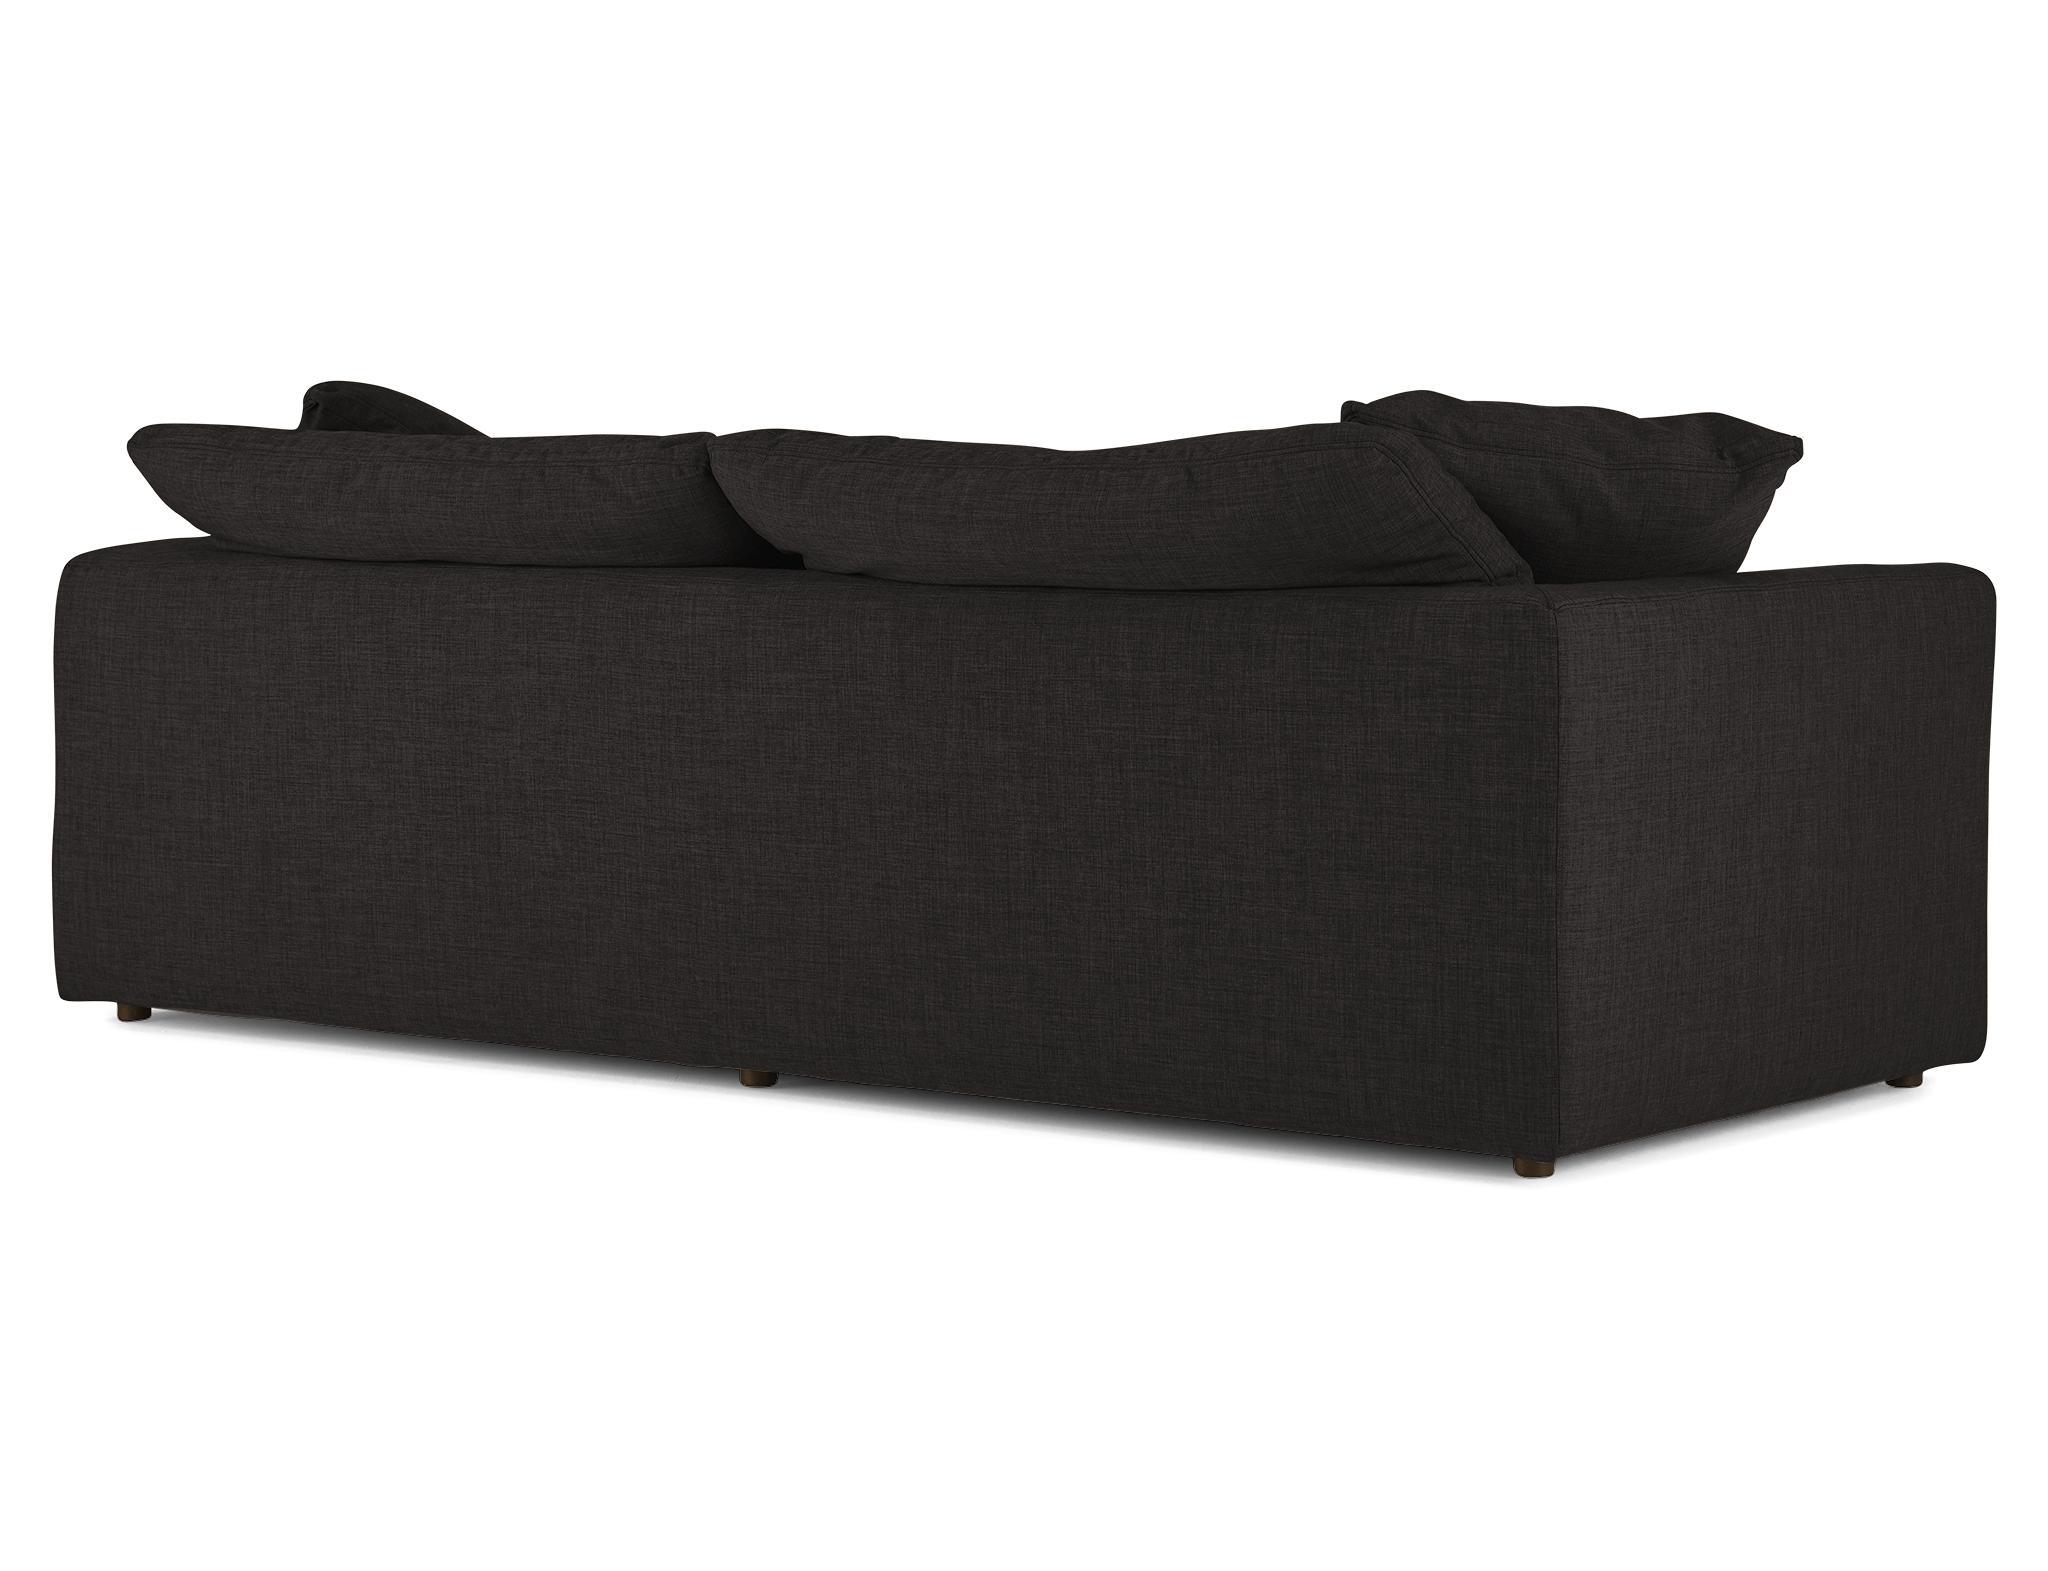 Gray Bryant Mid Century Modern Sofa - Cordova Eclipse - Image 3